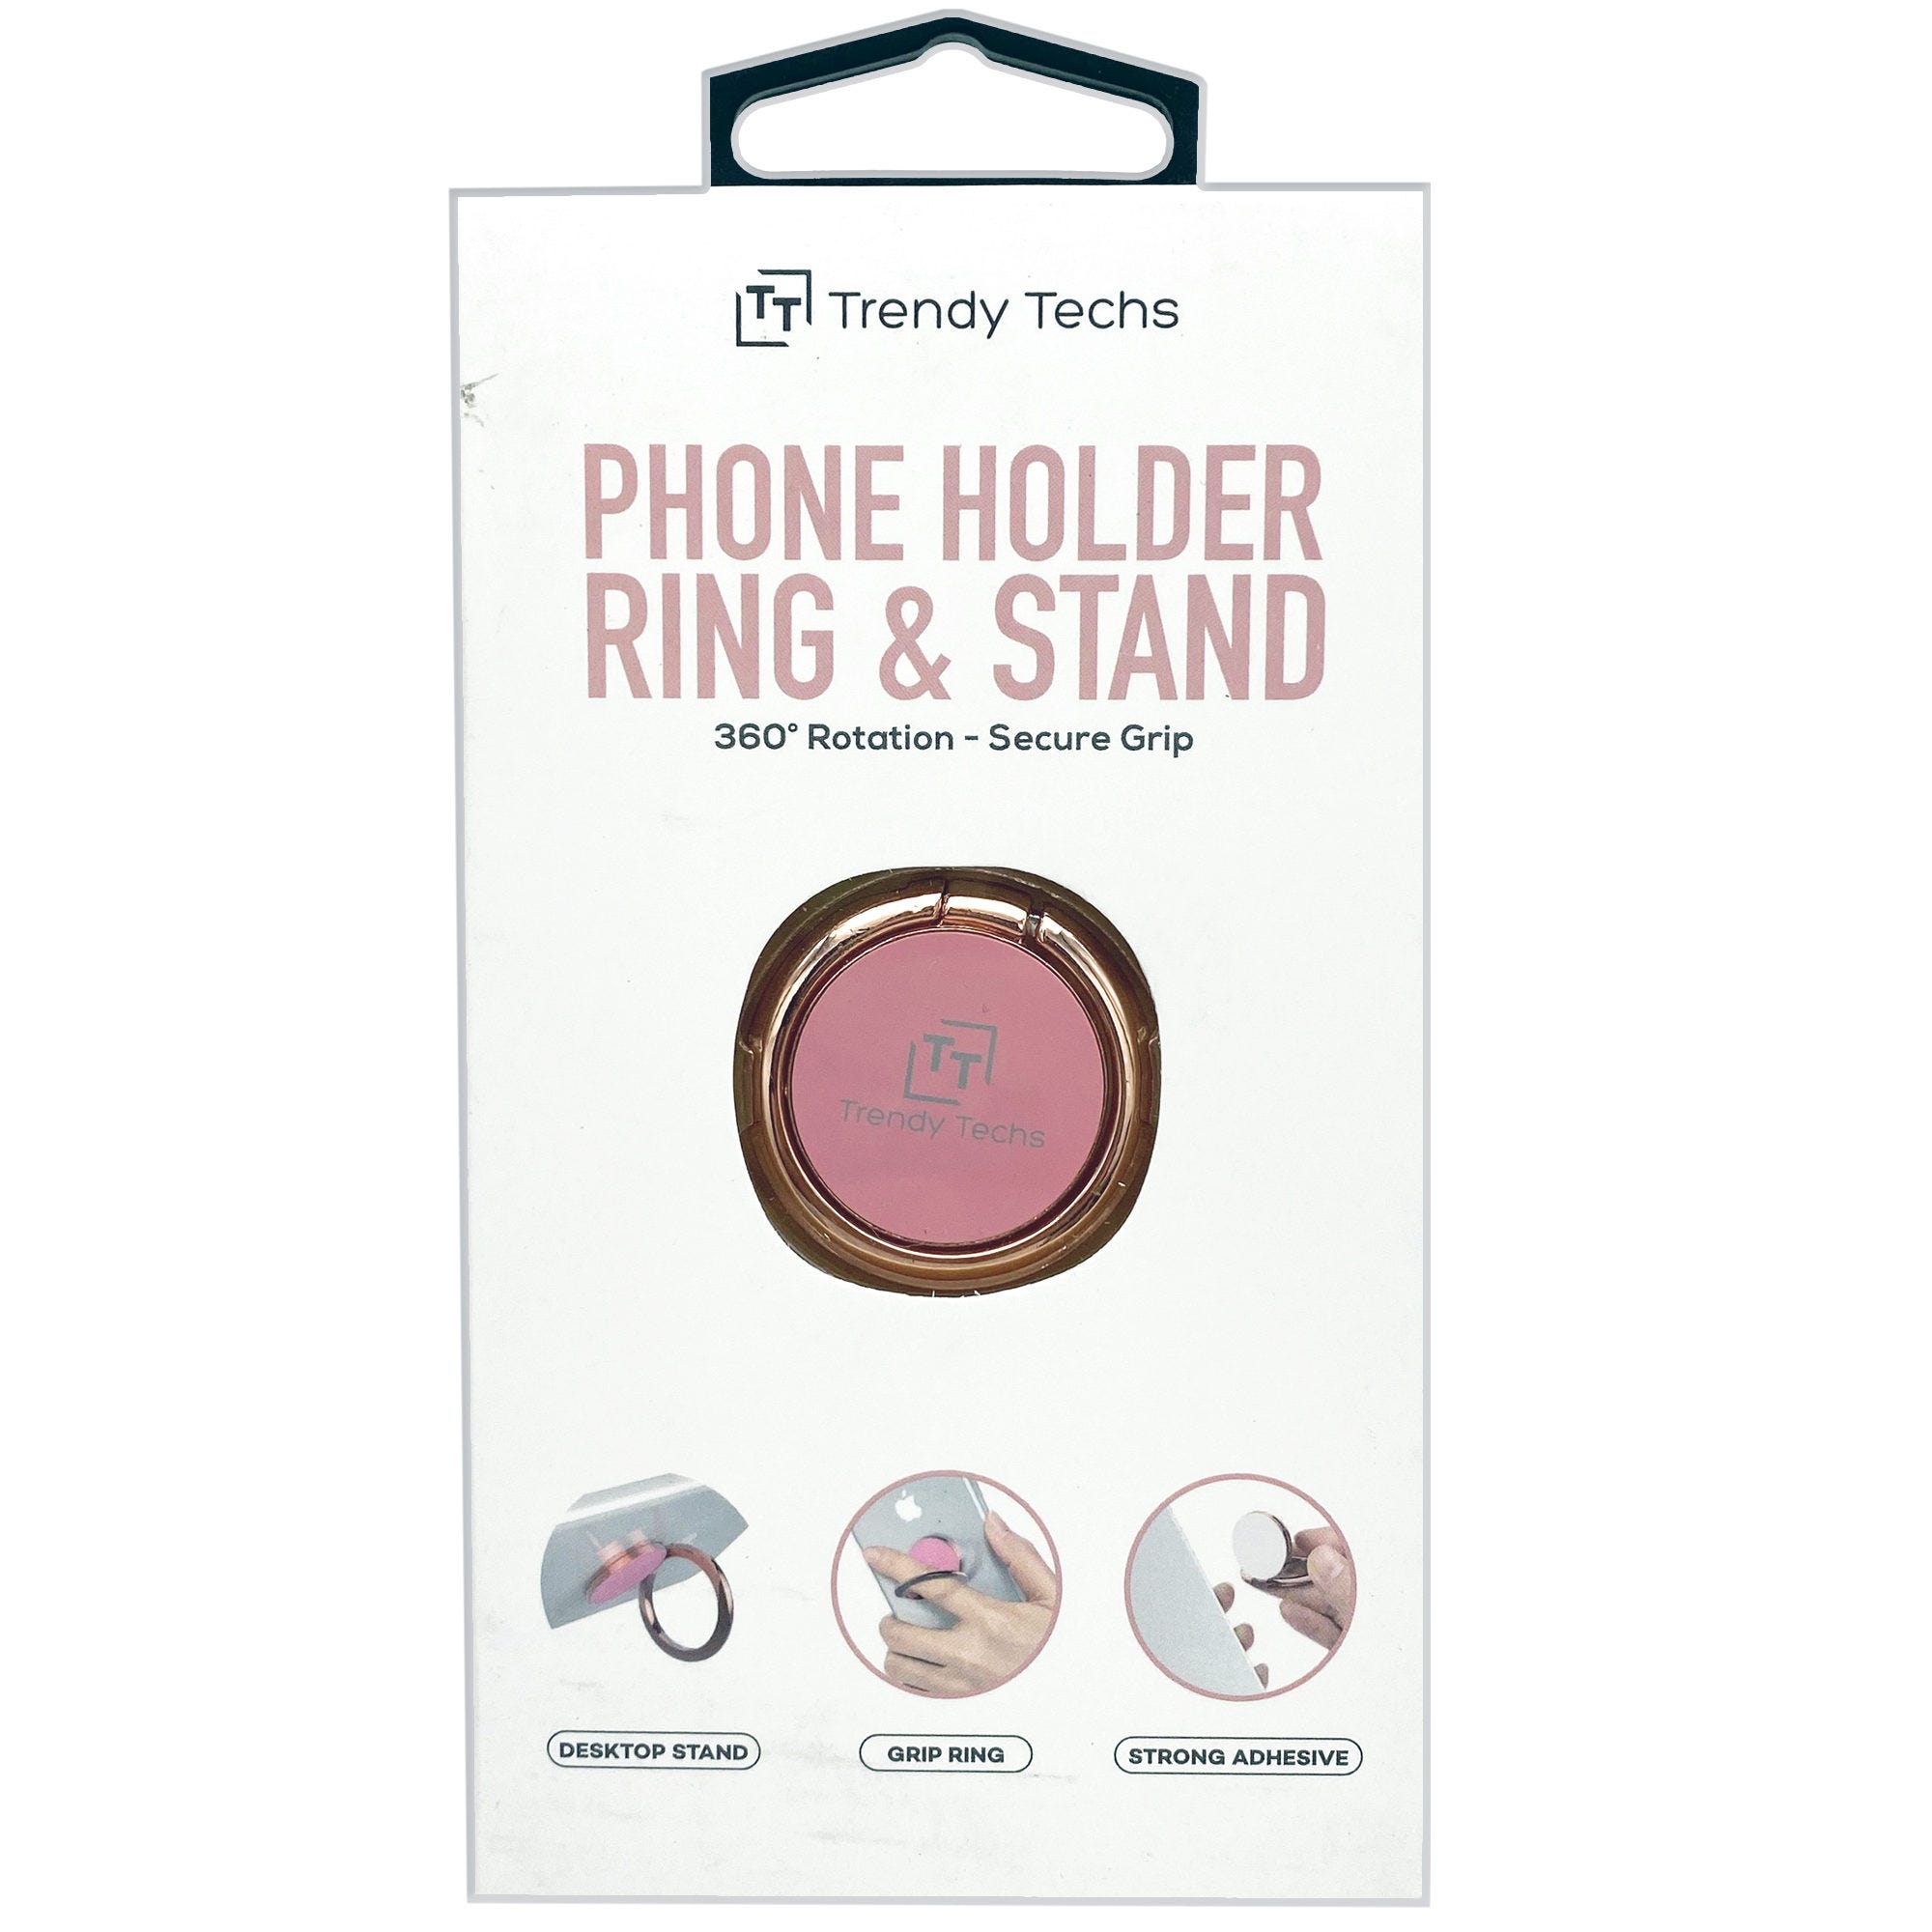 Trendy Techs Rose Gold Key RING Phone Holder - Qty 24